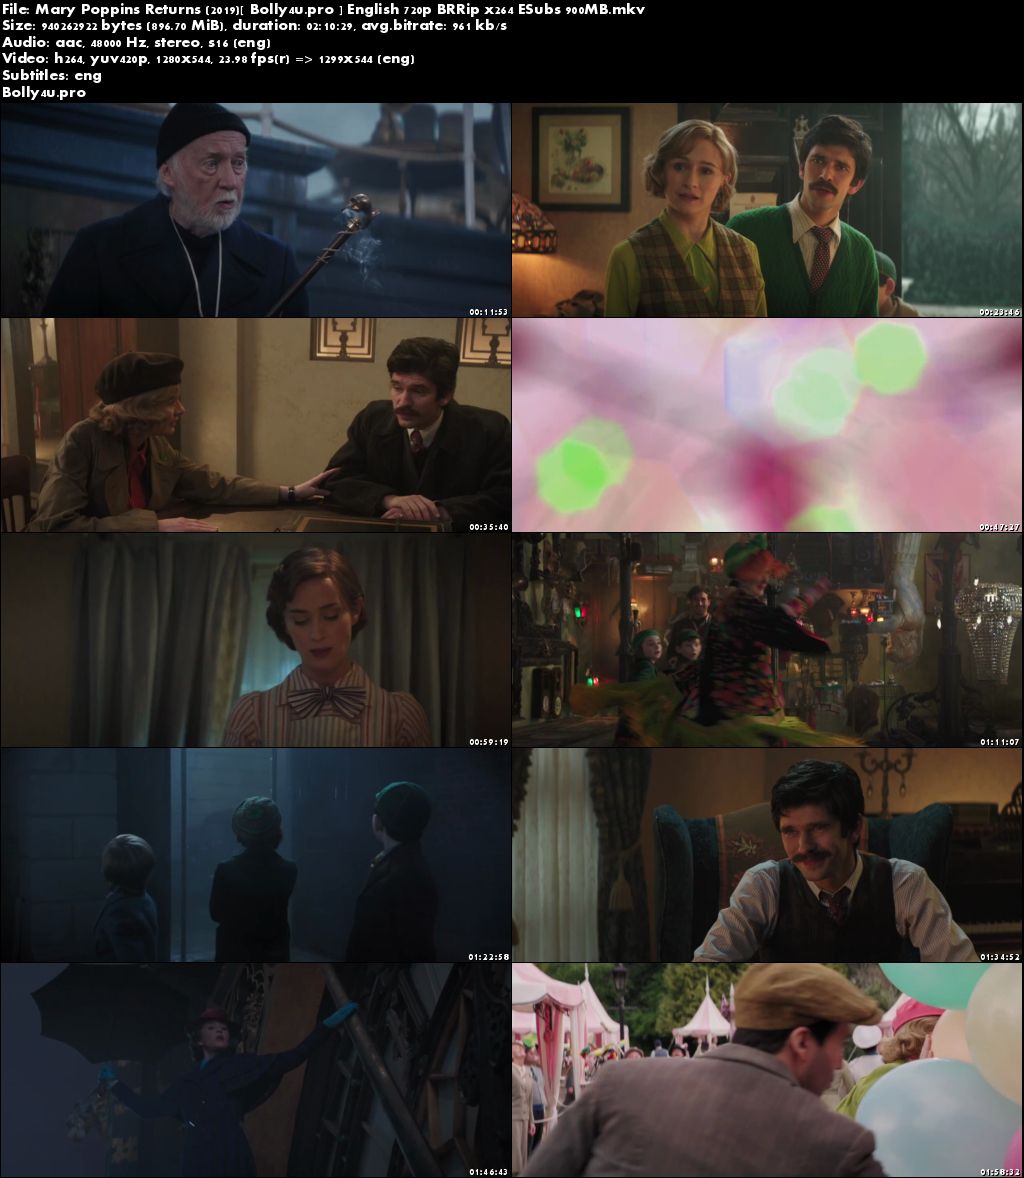 Mary Poppins Returns 2019 BRRip 900MB English 720p ESub Download